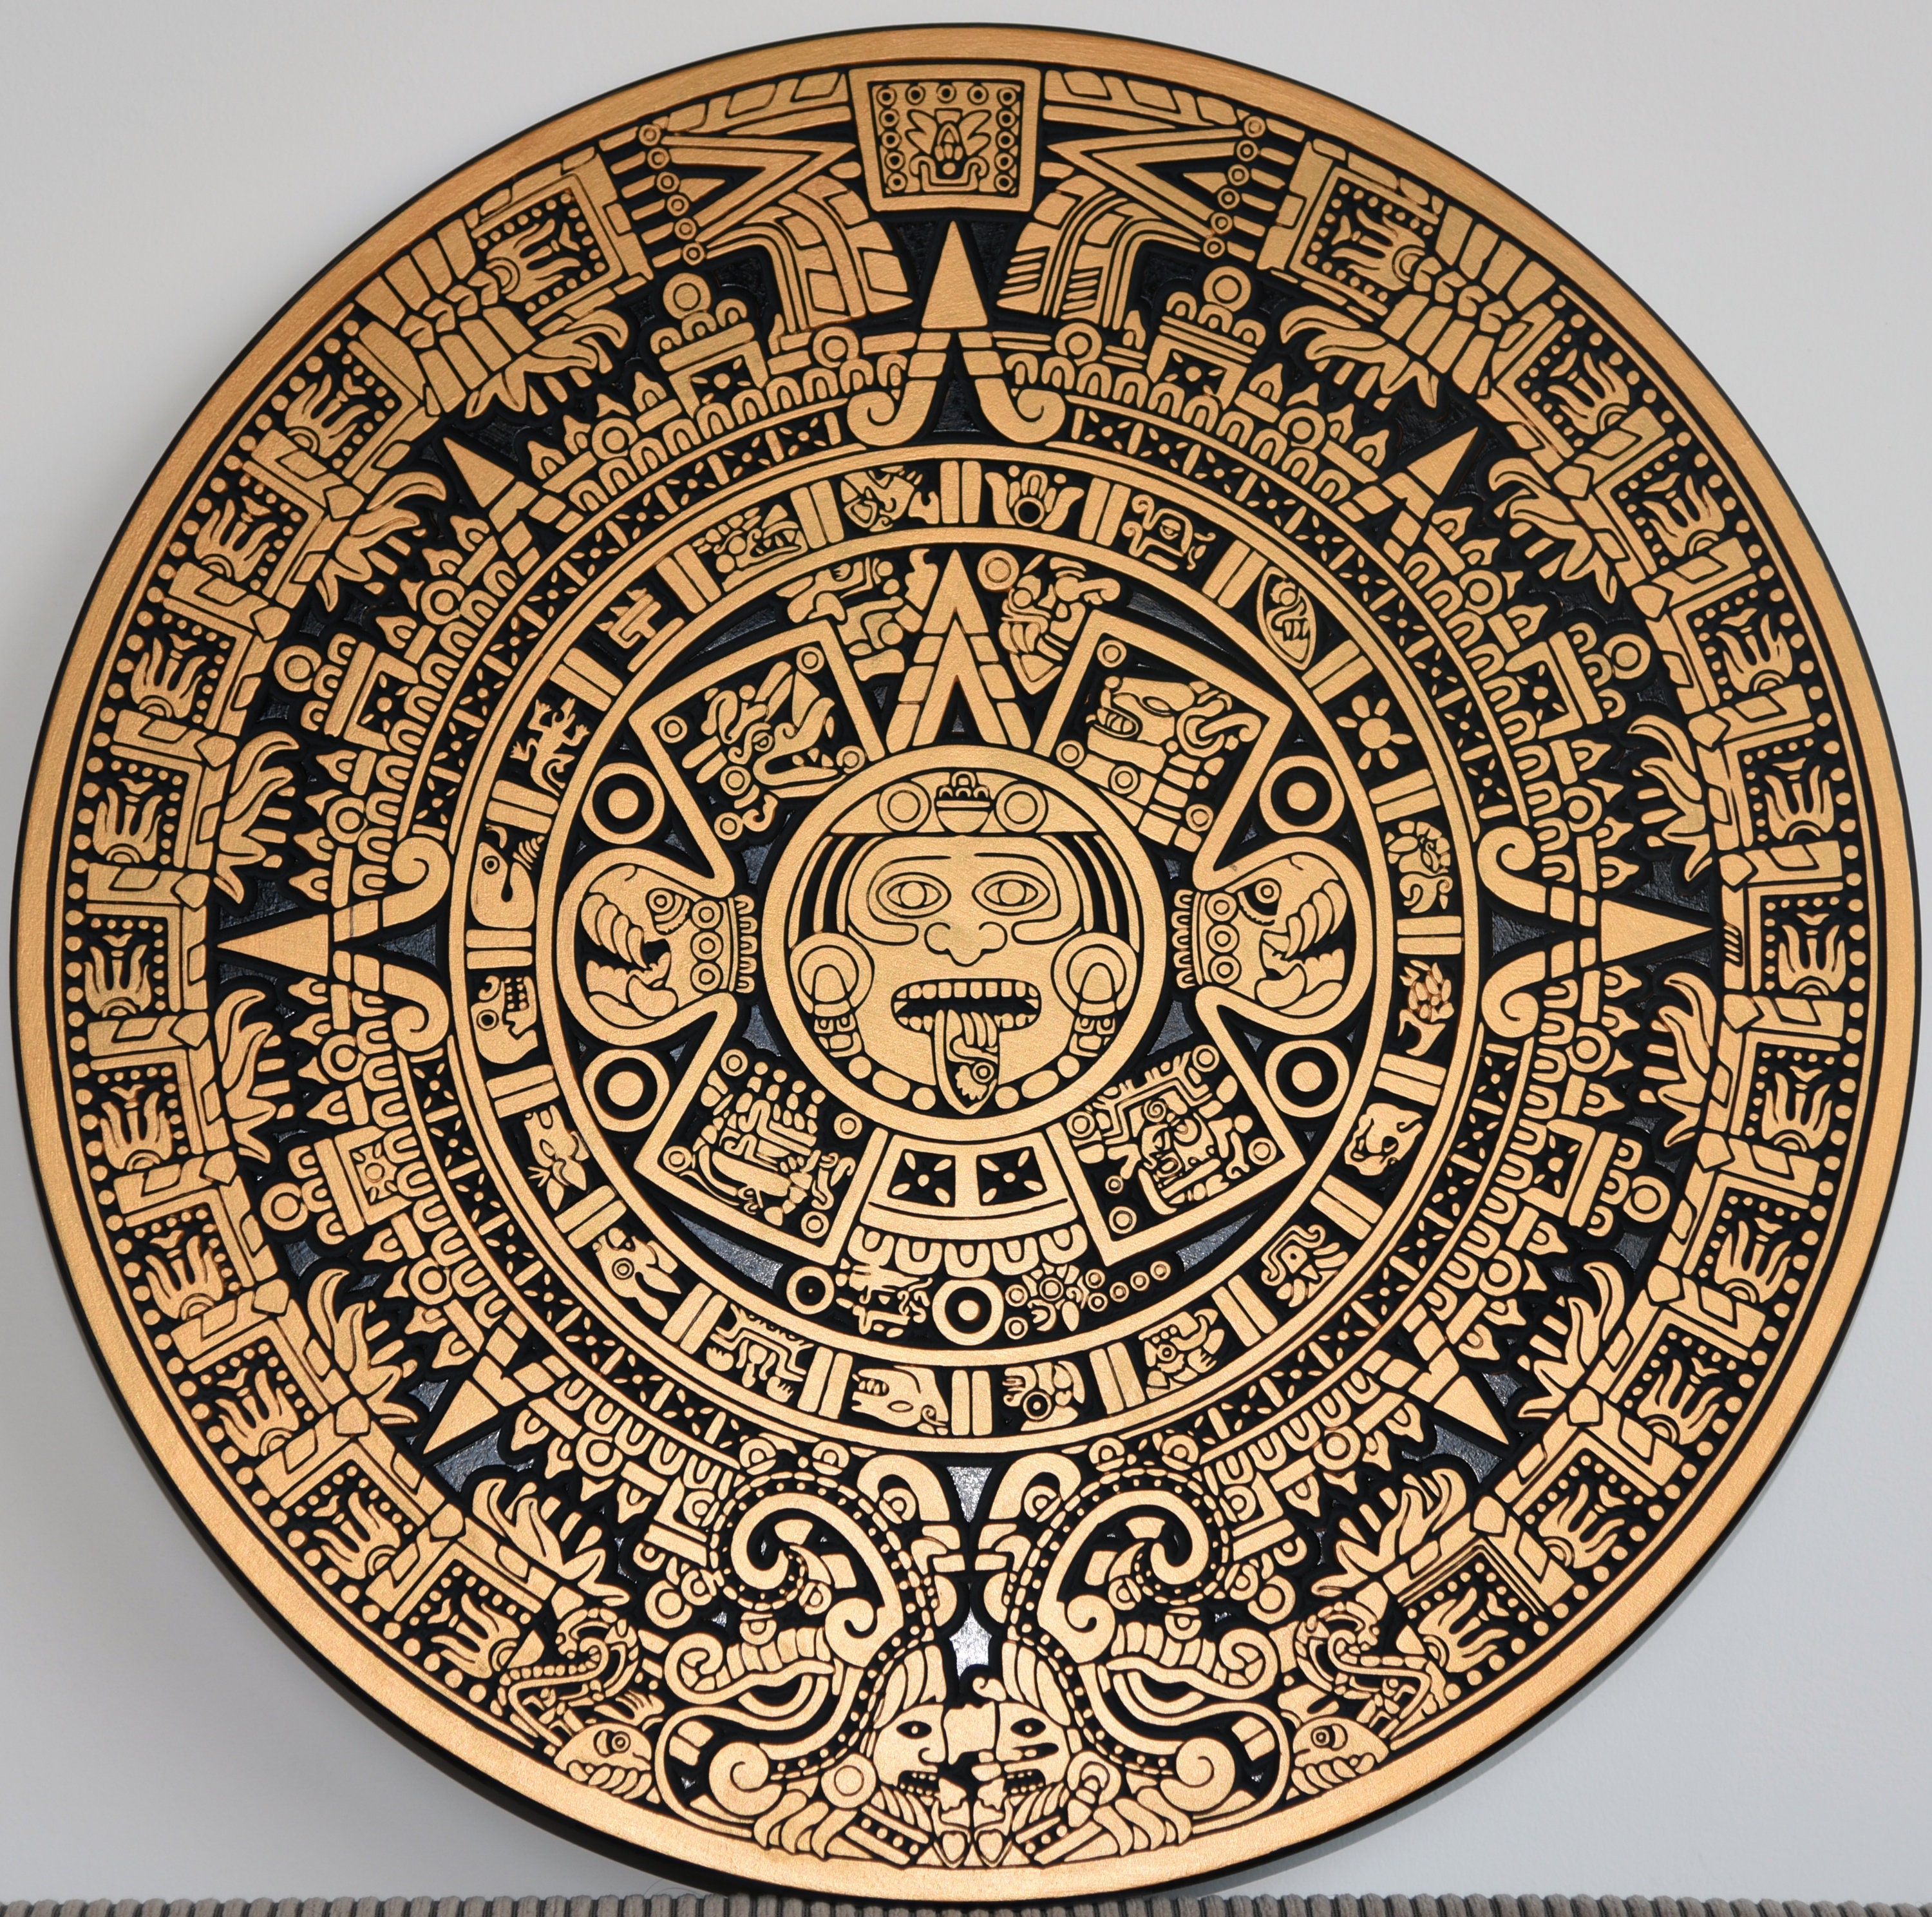 Календарь ма й я слушать. Солнечный календарь Майя. Символ солнца Майя Ацтеки инки. Ацтекский календарь Майя. Цолькин календарь Майя.